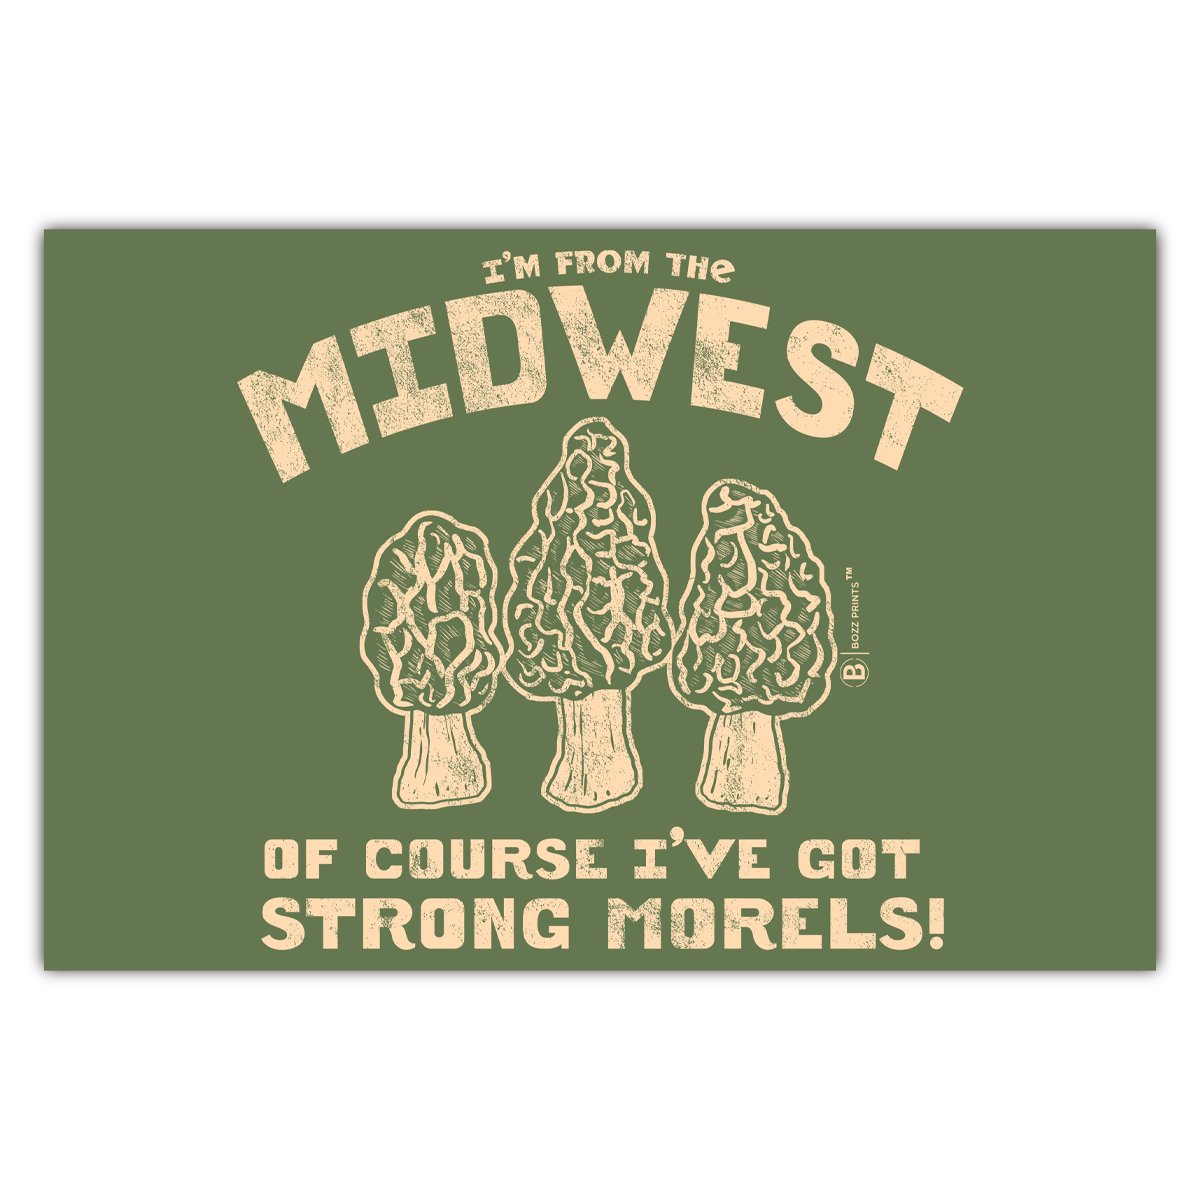 Midwest Morels Postcard